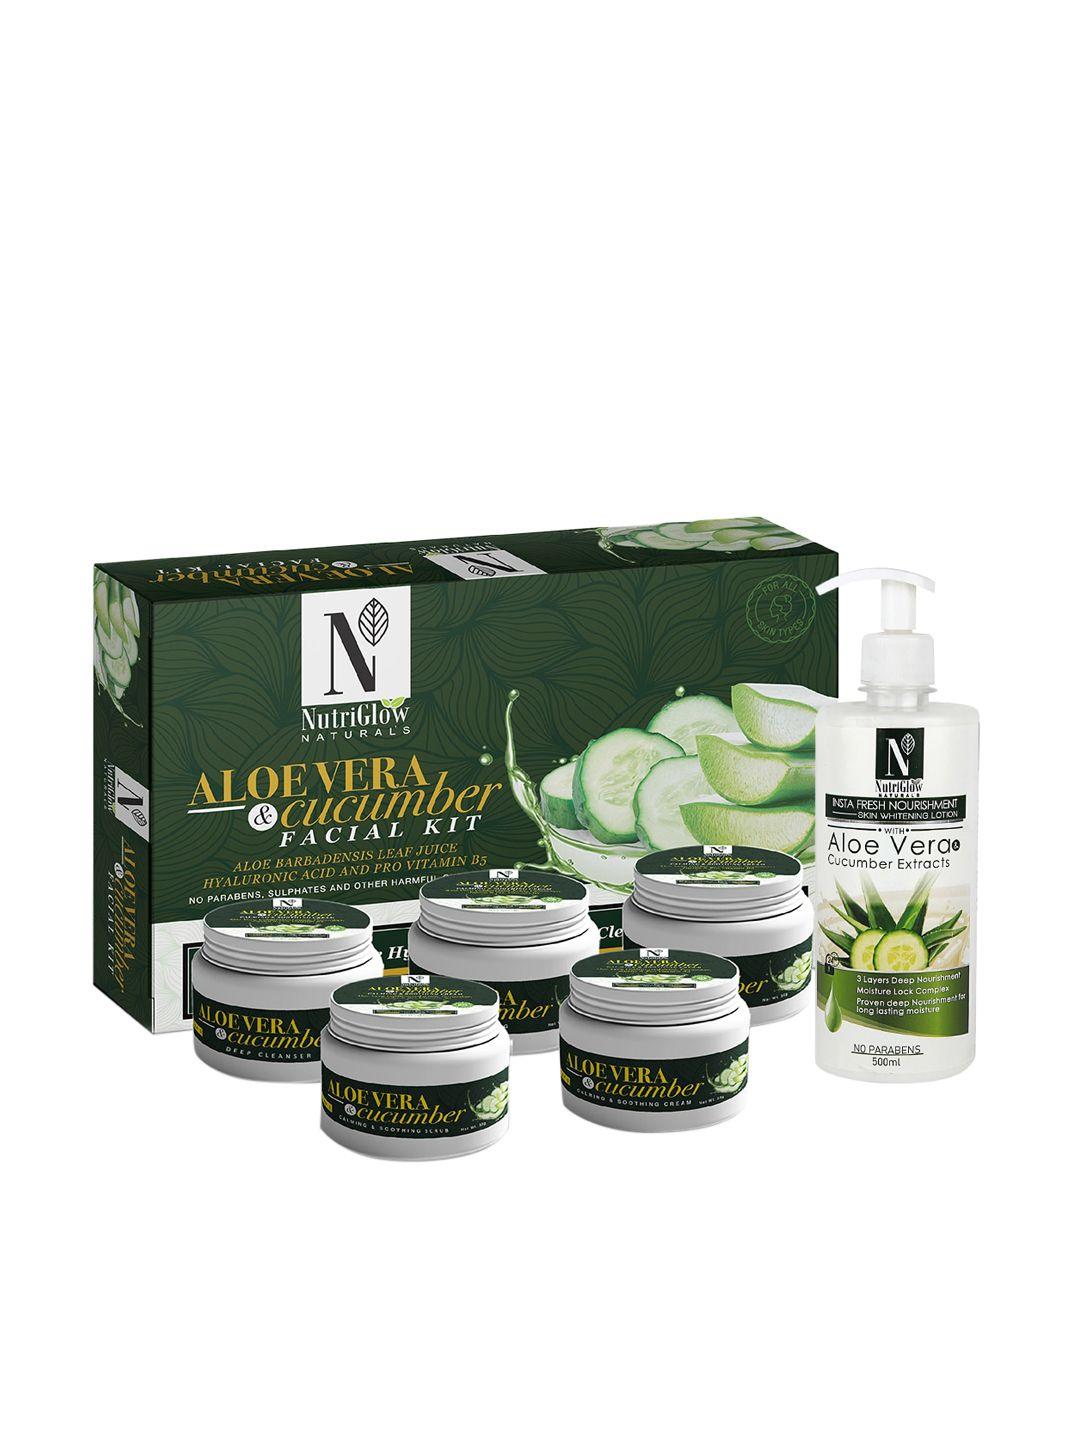 nutriglow naturals aloe vera & cucumber facial kit 250g+10ml & skin whitening lotion 500ml